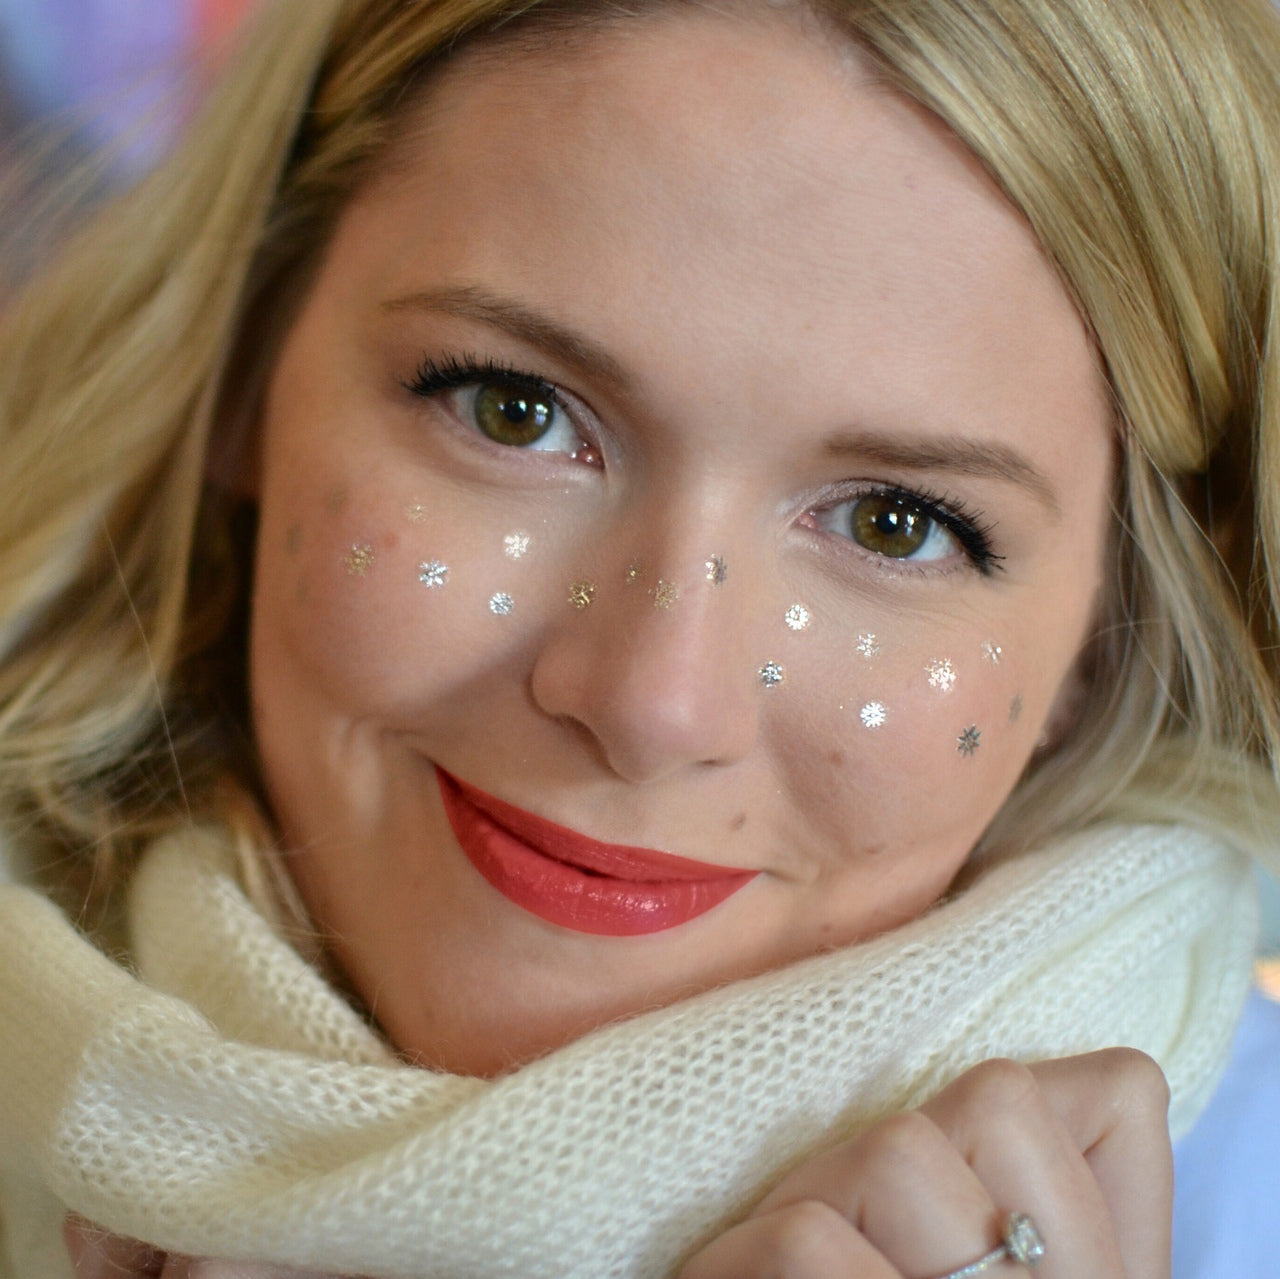 Adorn your cheeks in metallic silver 'Snowflake Freckles' temporary holiday tattoo. @FlashTattoos #FLASHTAT